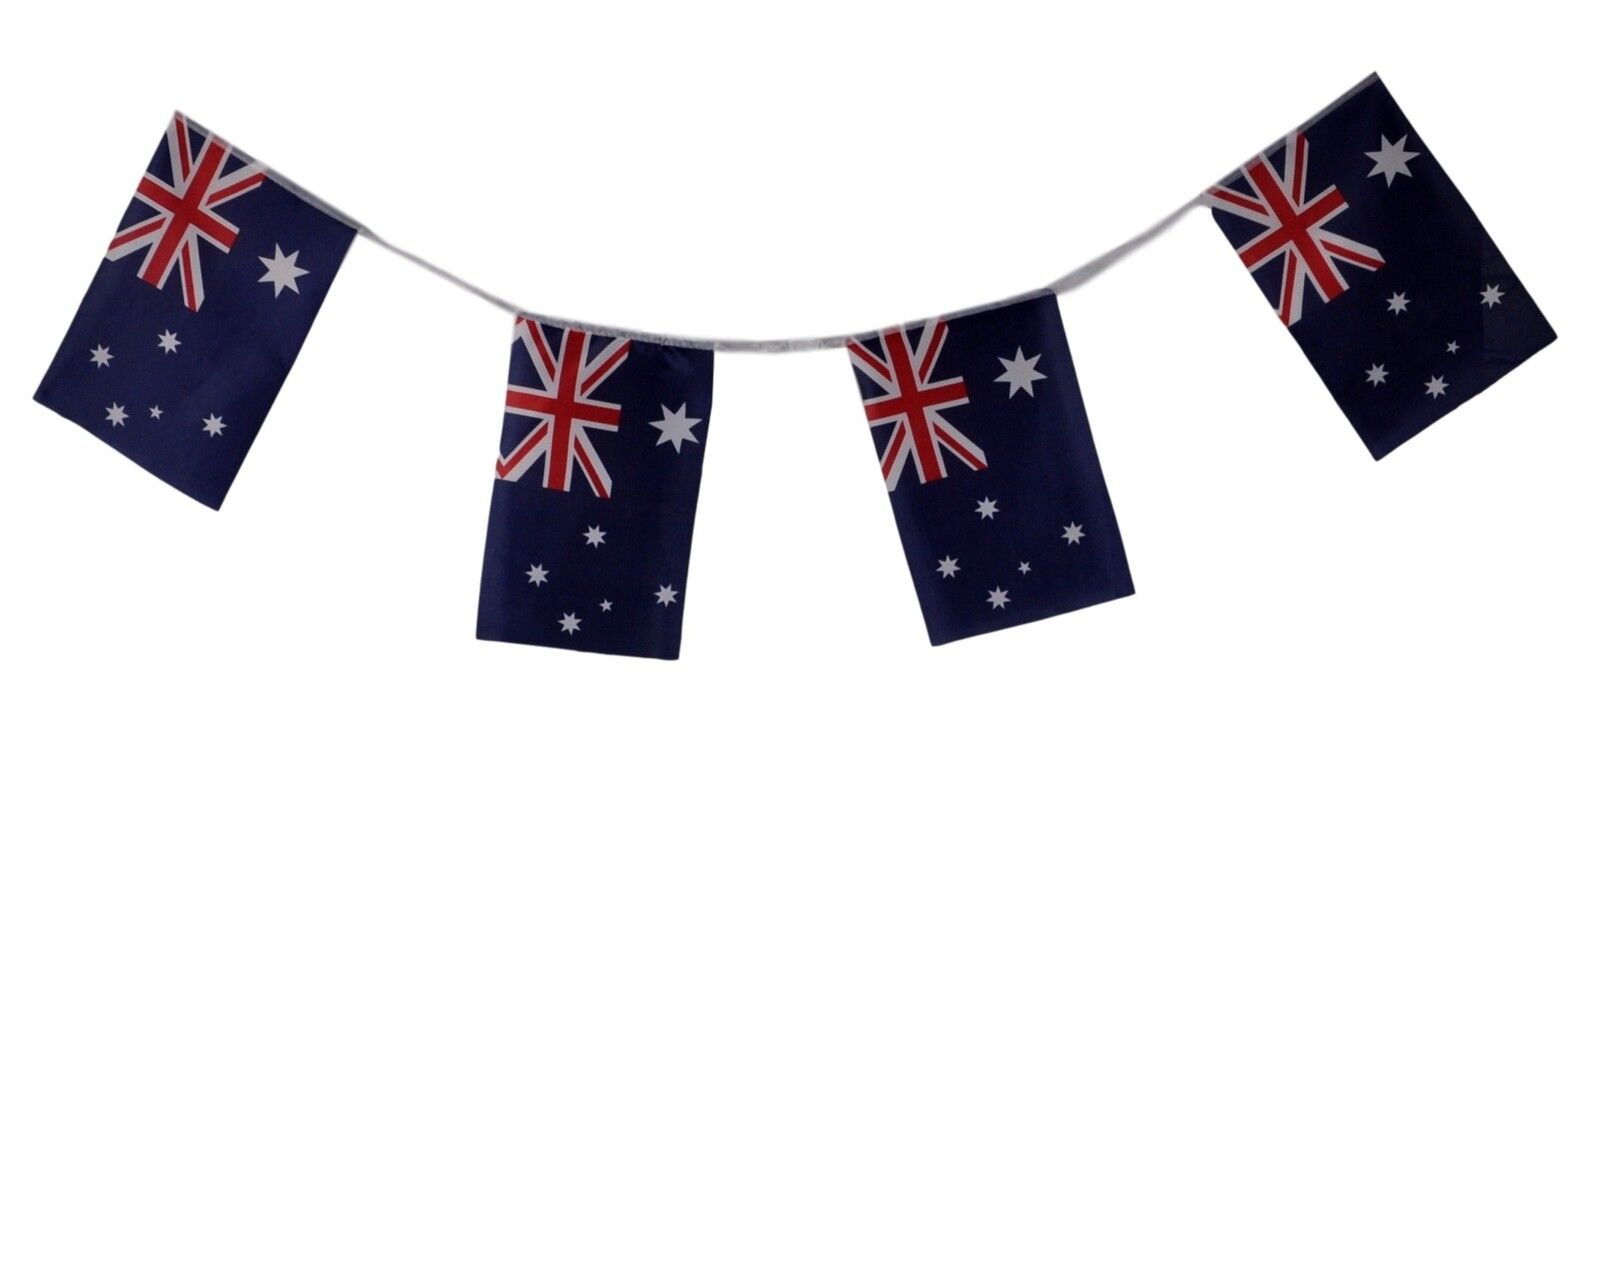  Aussie Australian Flag Bunting Banner String  Australia Day Party Décor 3M